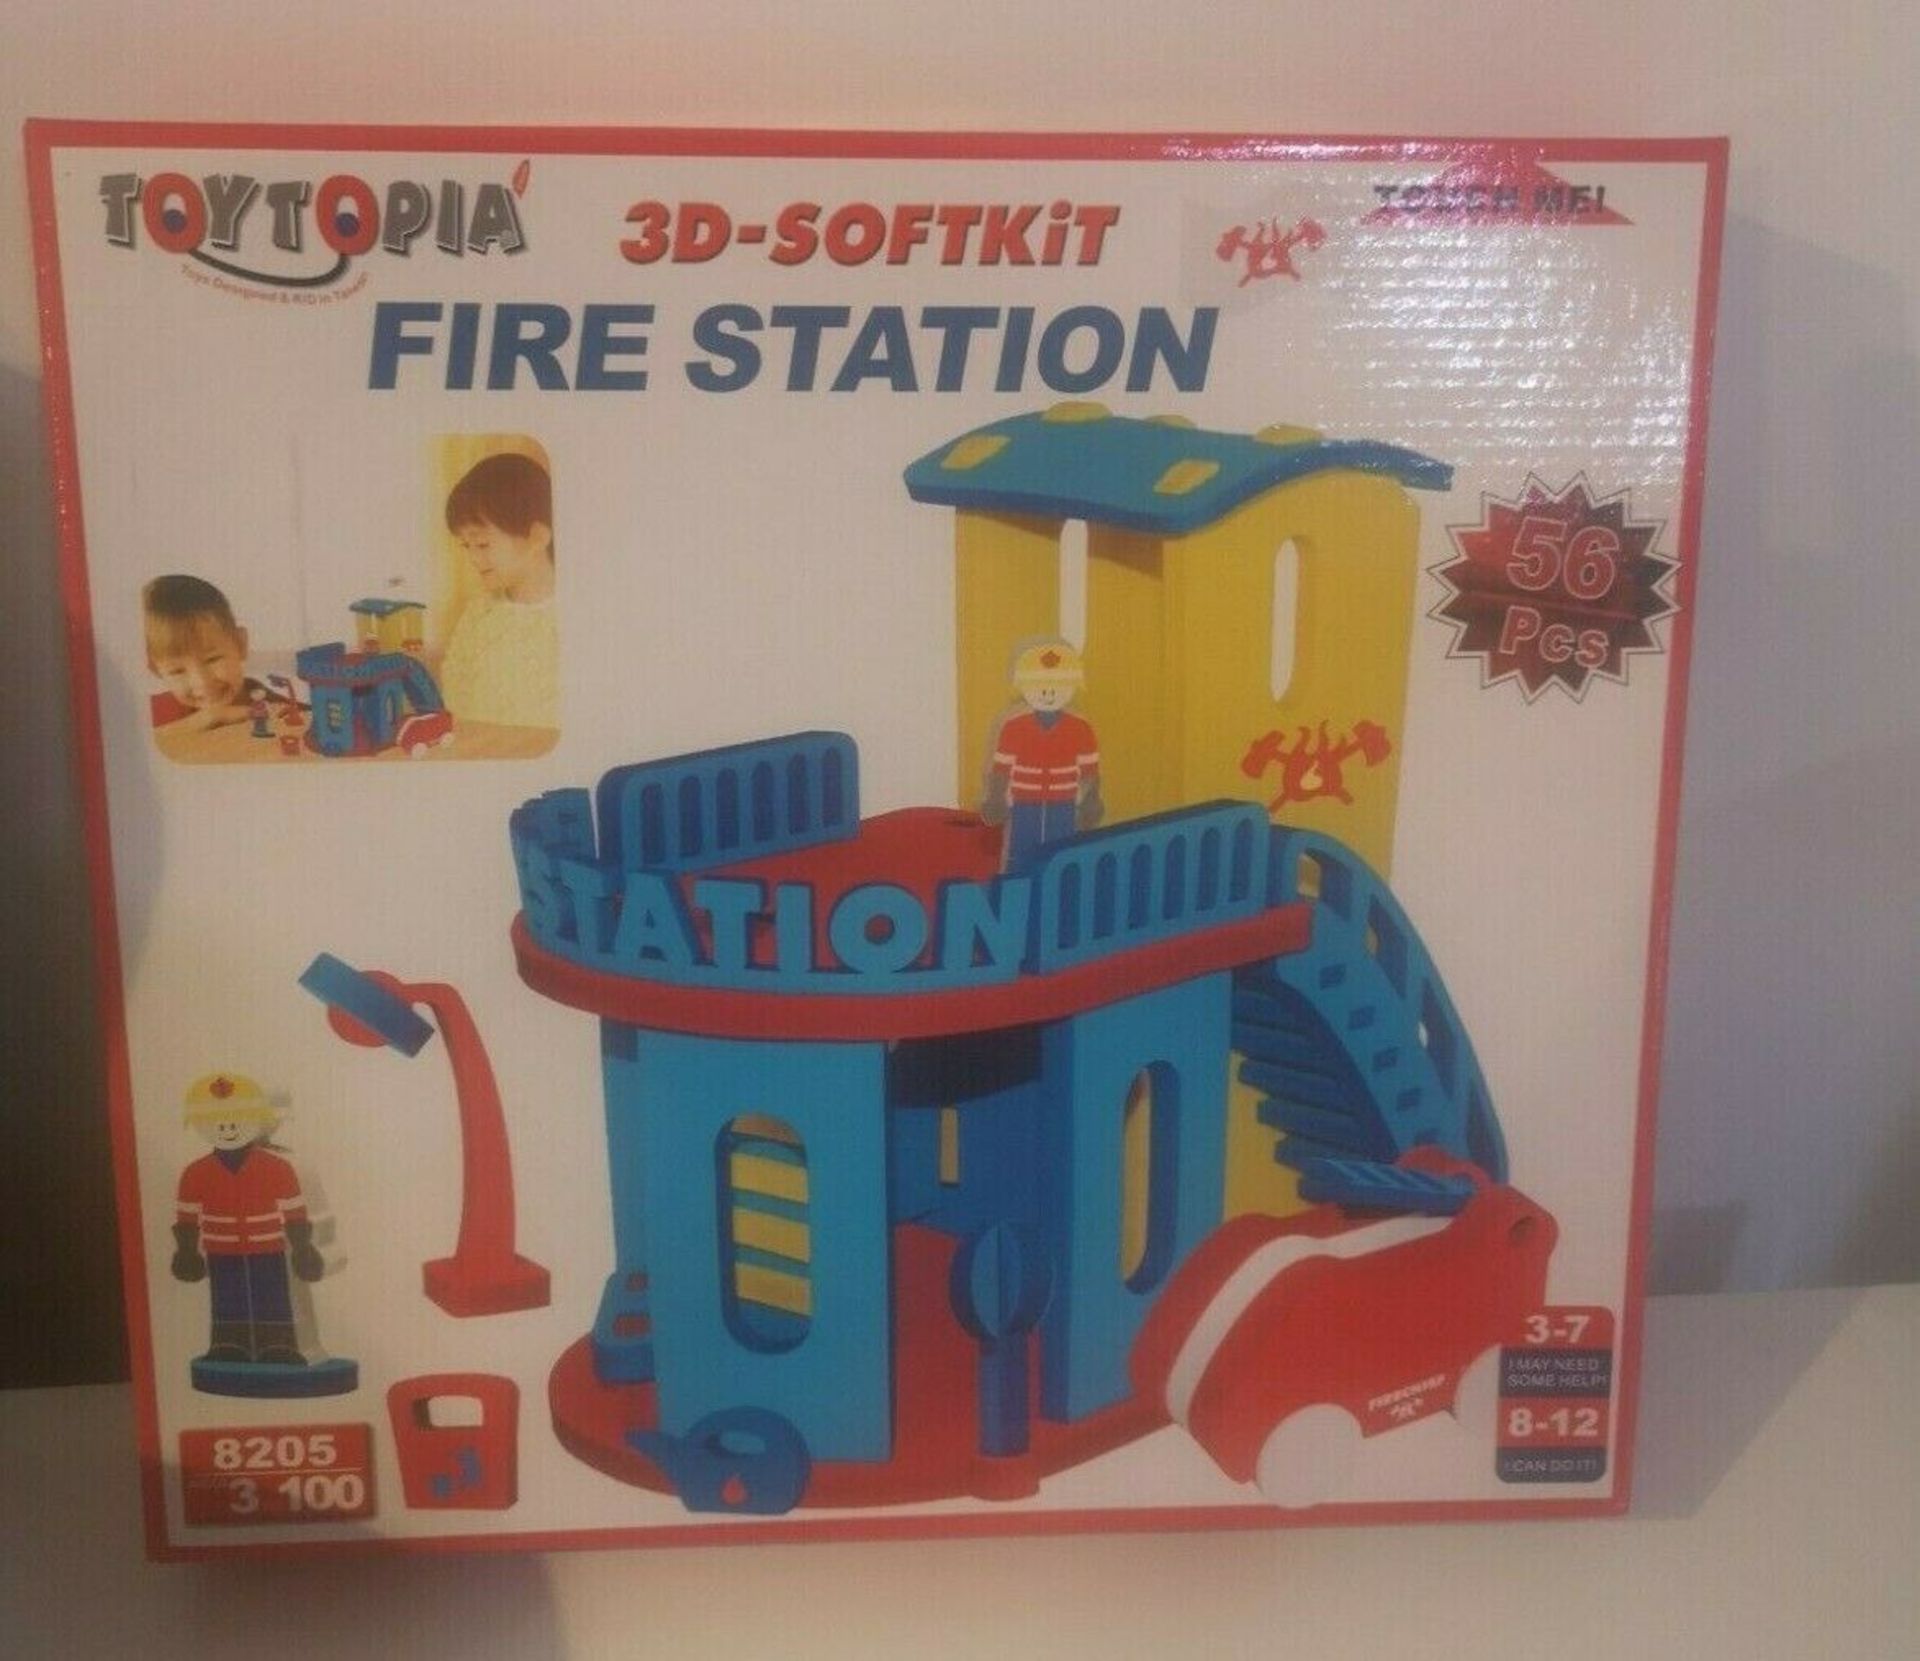 Toytopia 3D Softkit Fire Station - 56 Piece Play Set